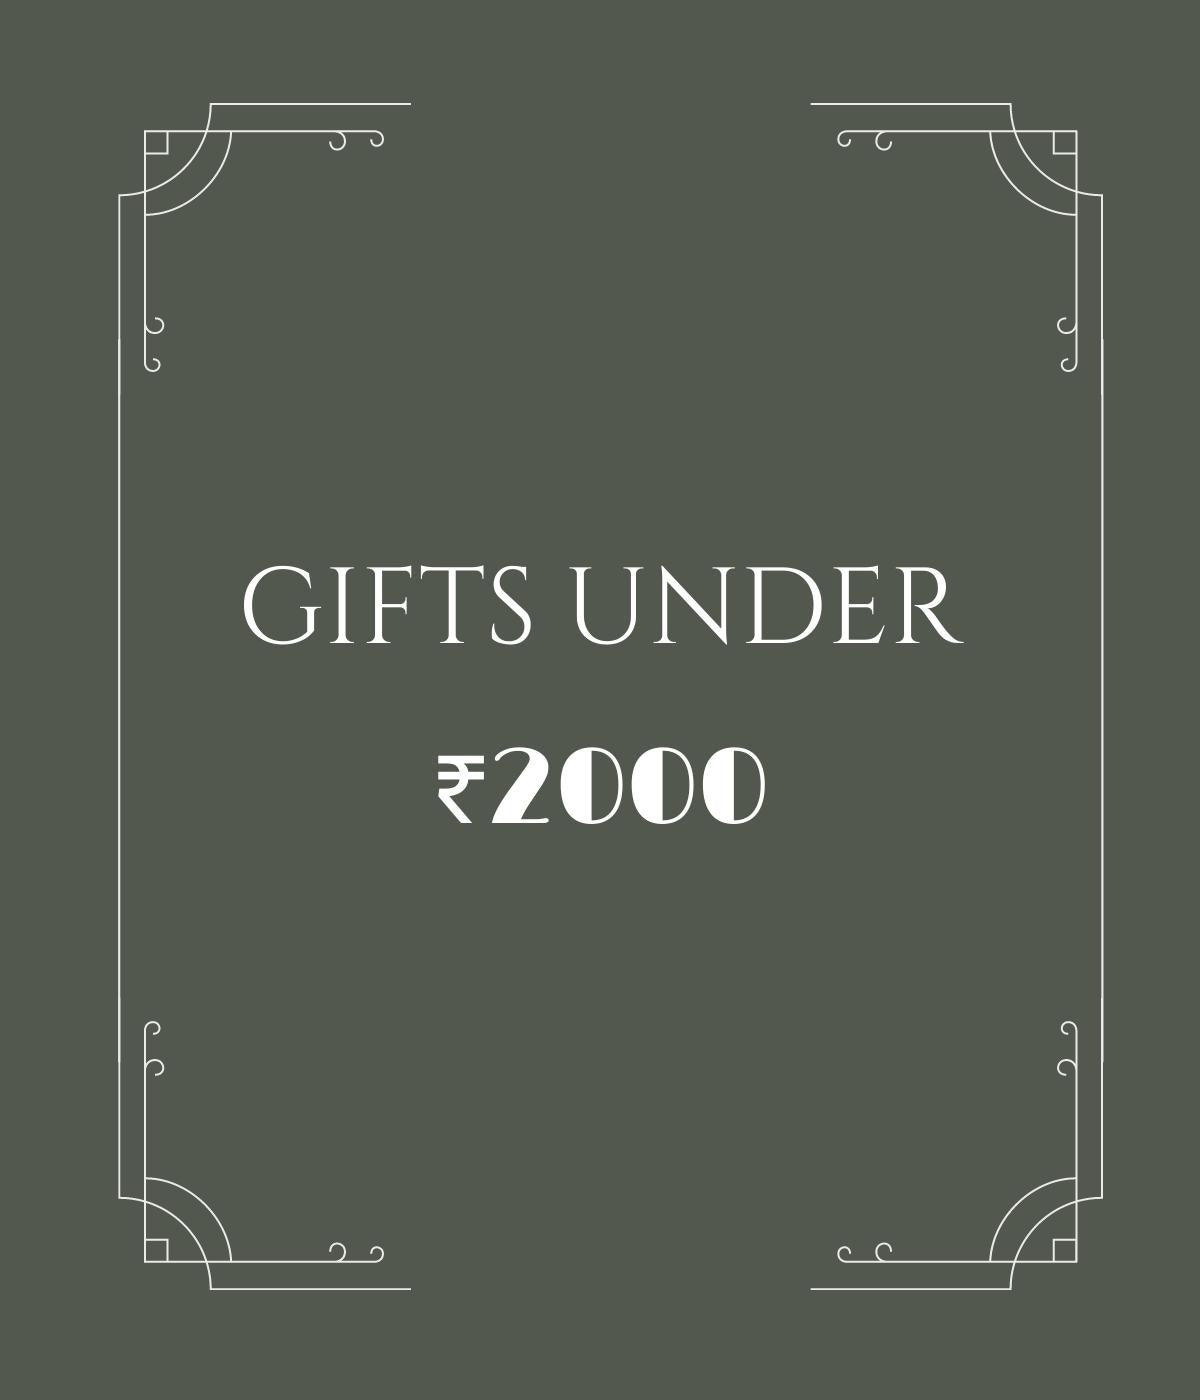 Gifts under ₹2000